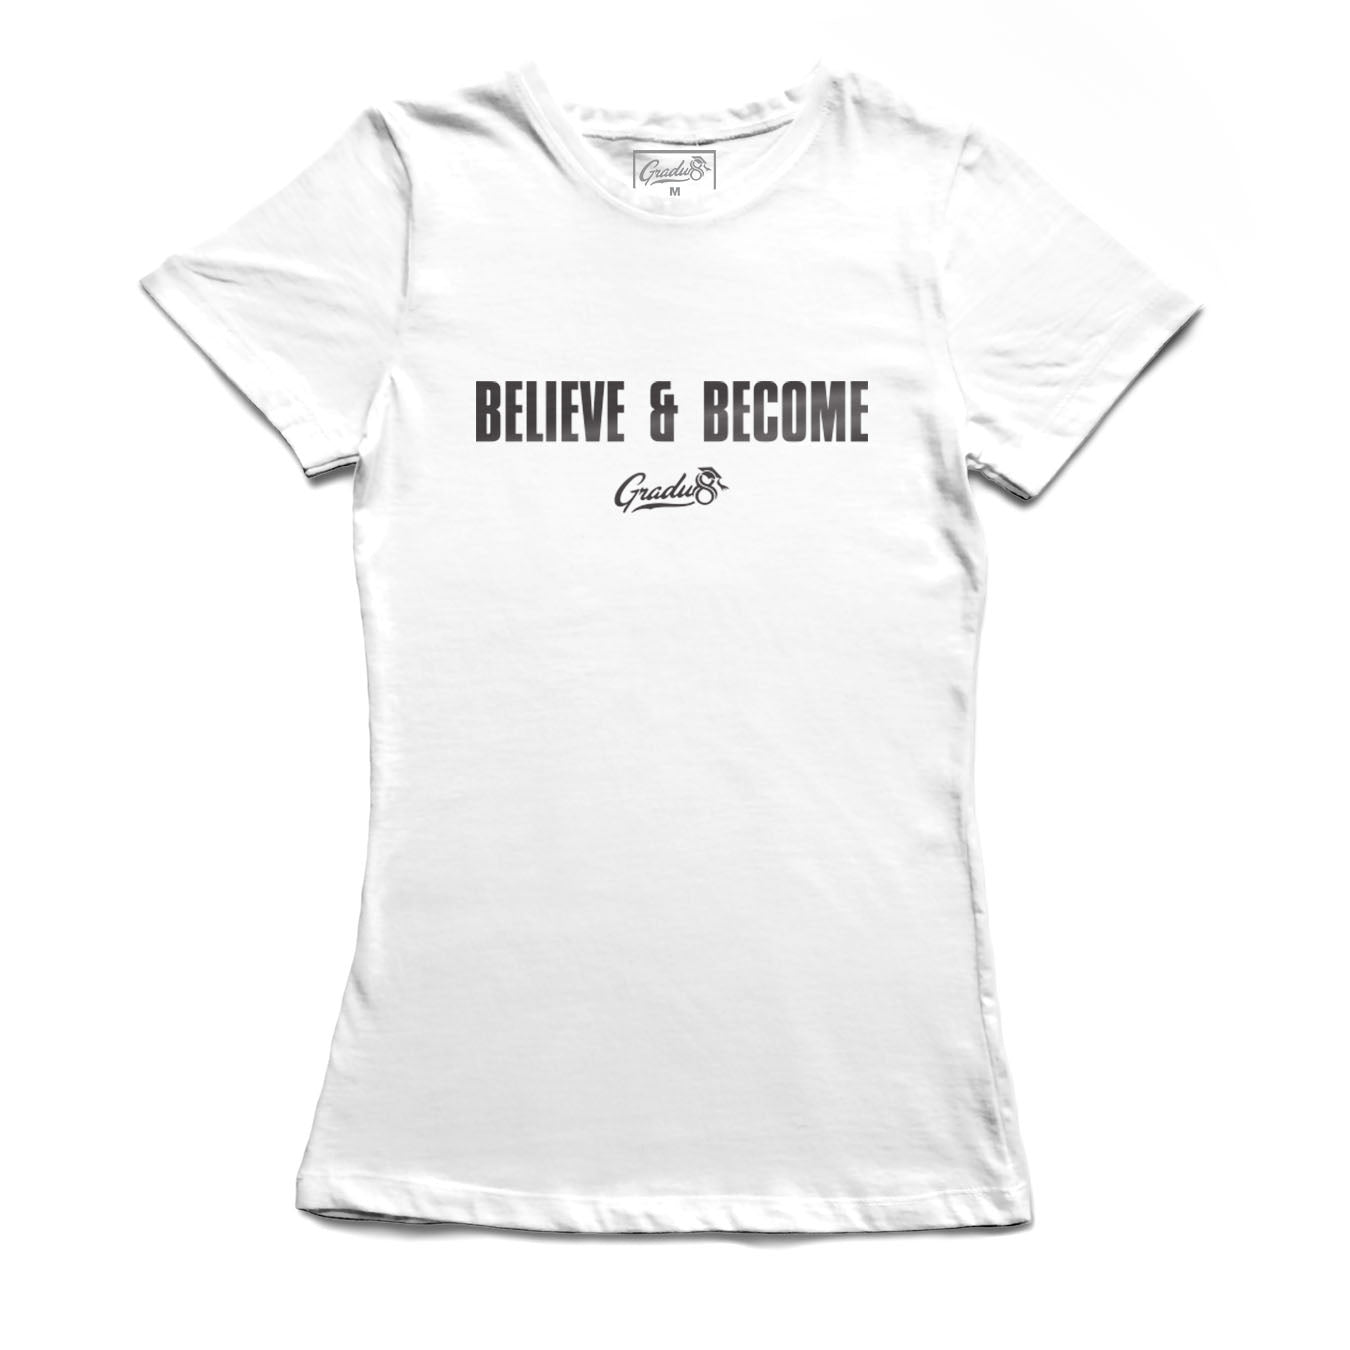 Women's Original Believe & Become T-shirt - White